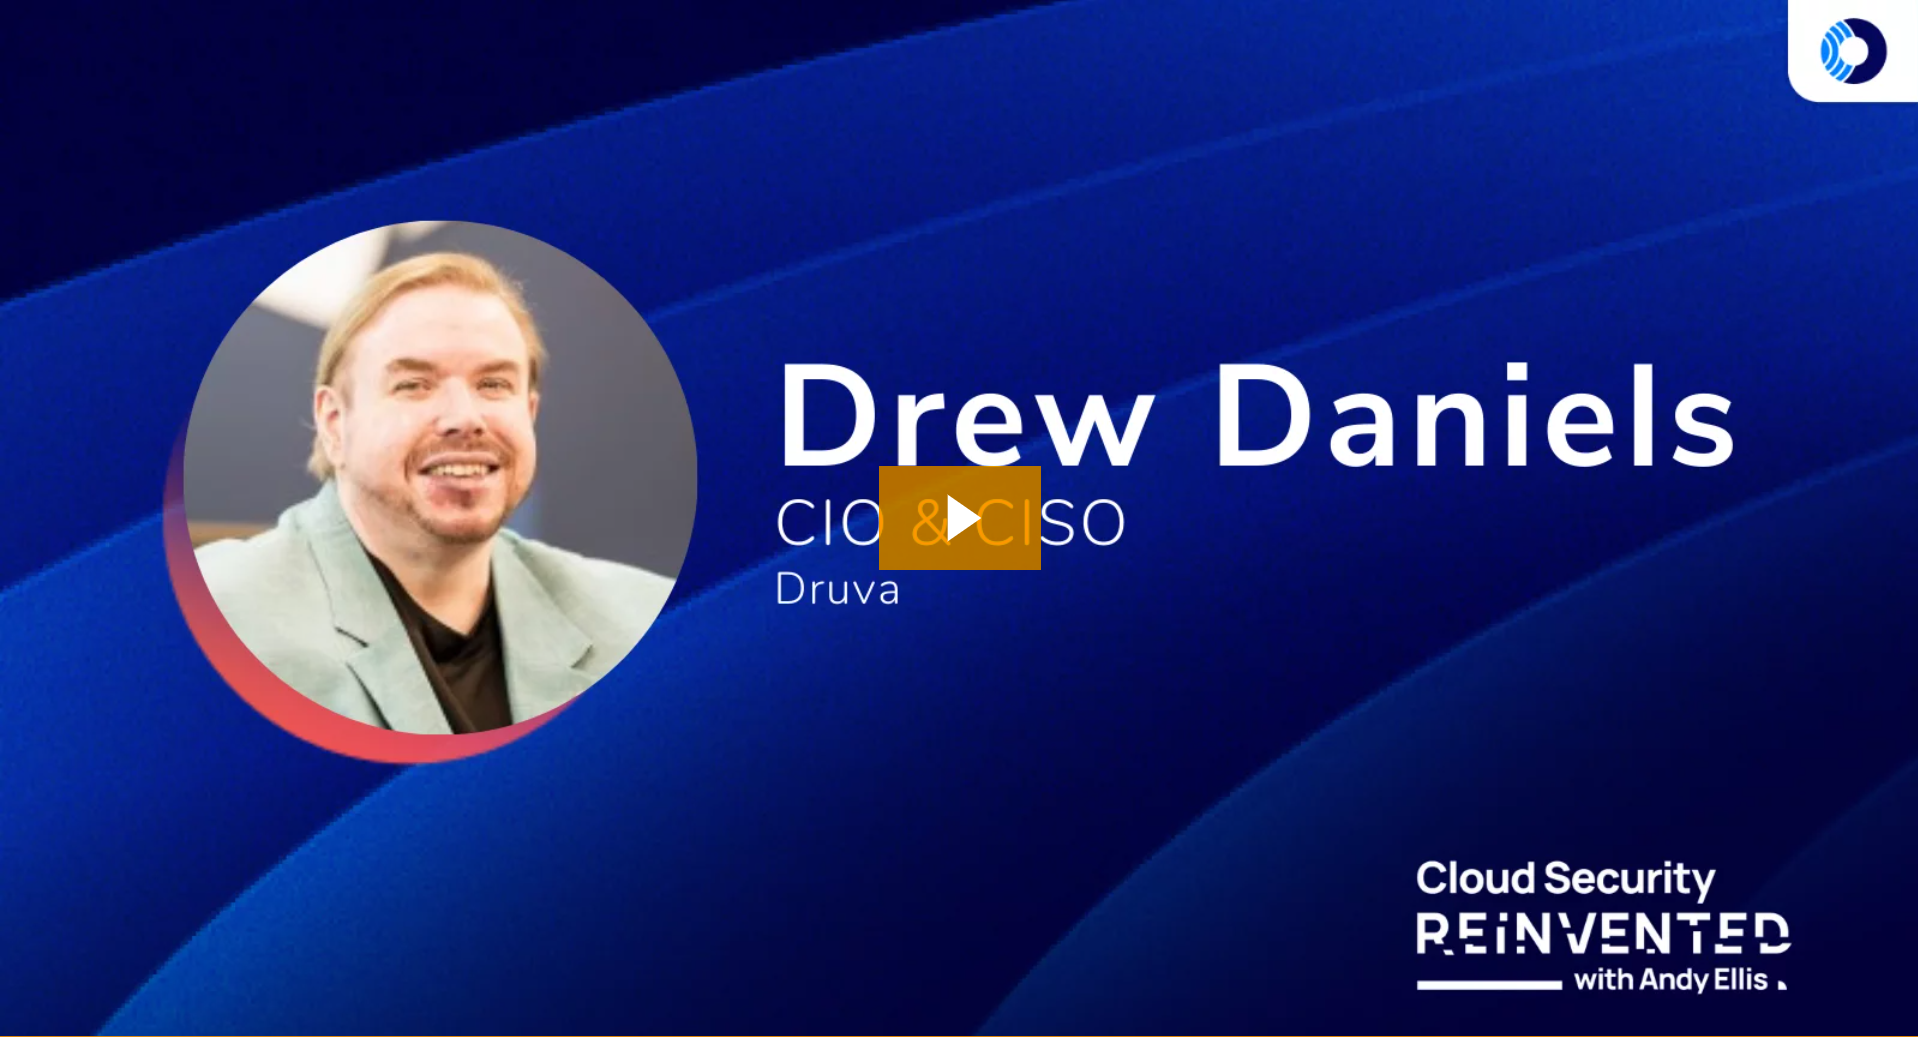 Cloud Security Reinvented: Drew Daniels